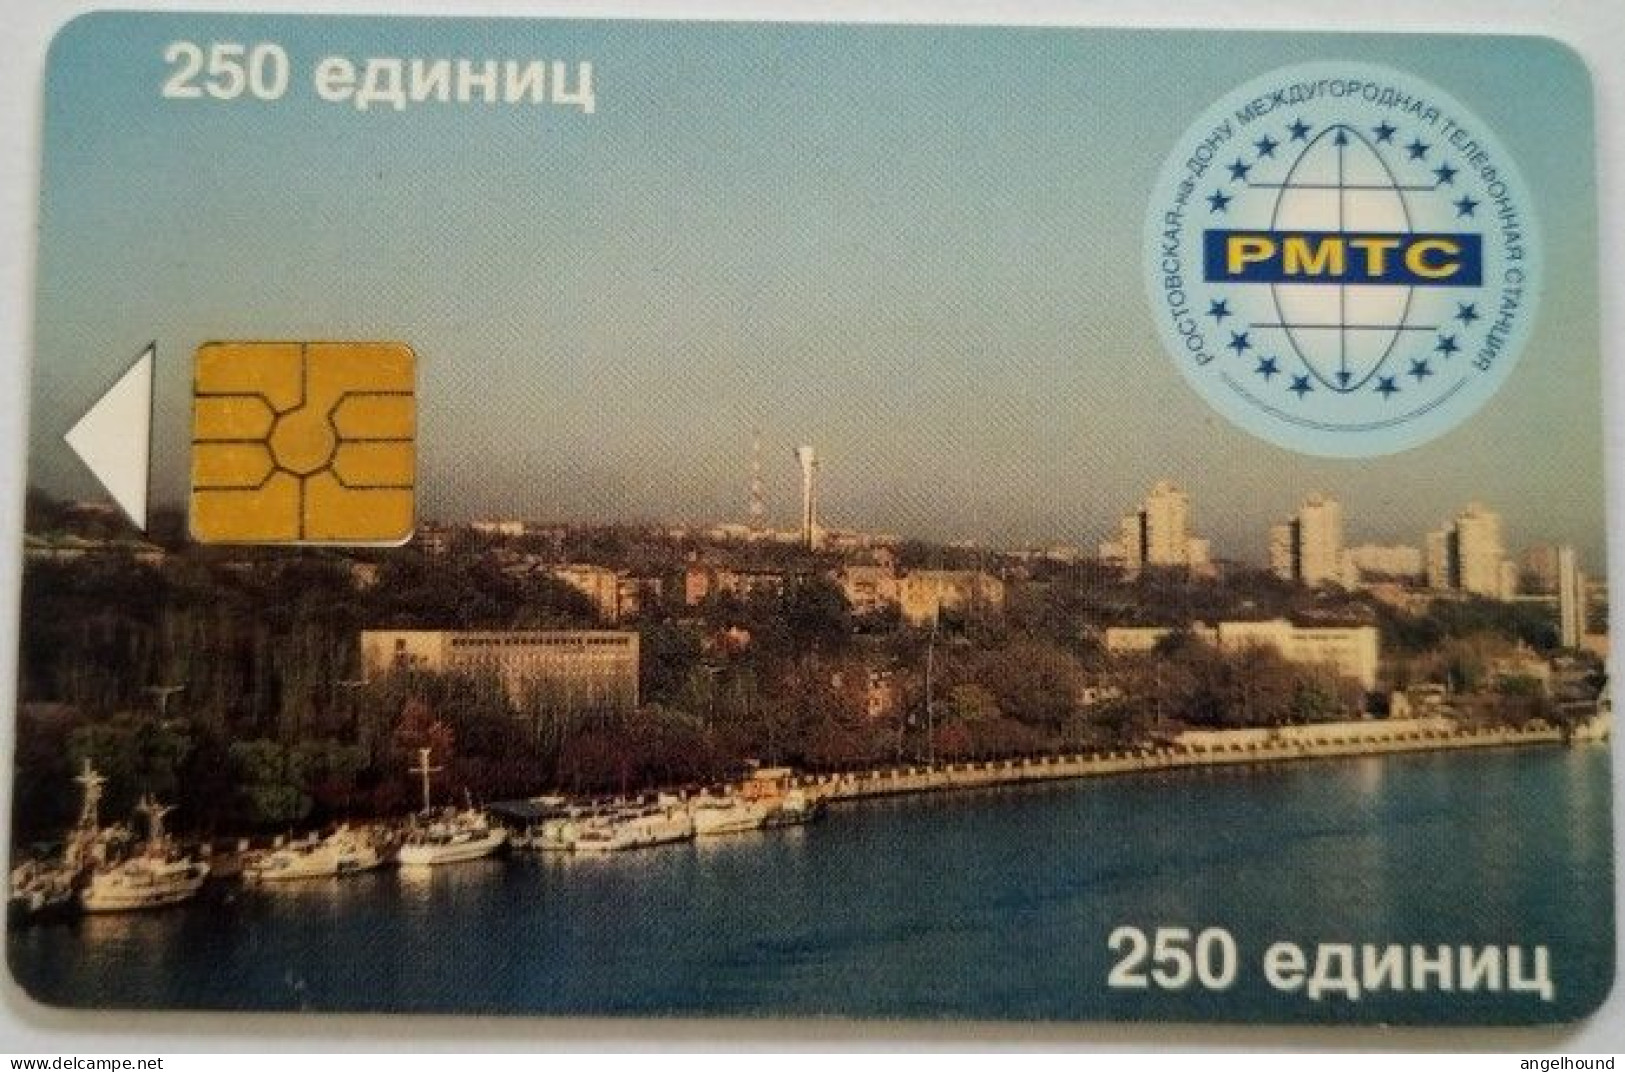 Russia 250 Rub.  Chip Card - PMTC Card - Don - Russia